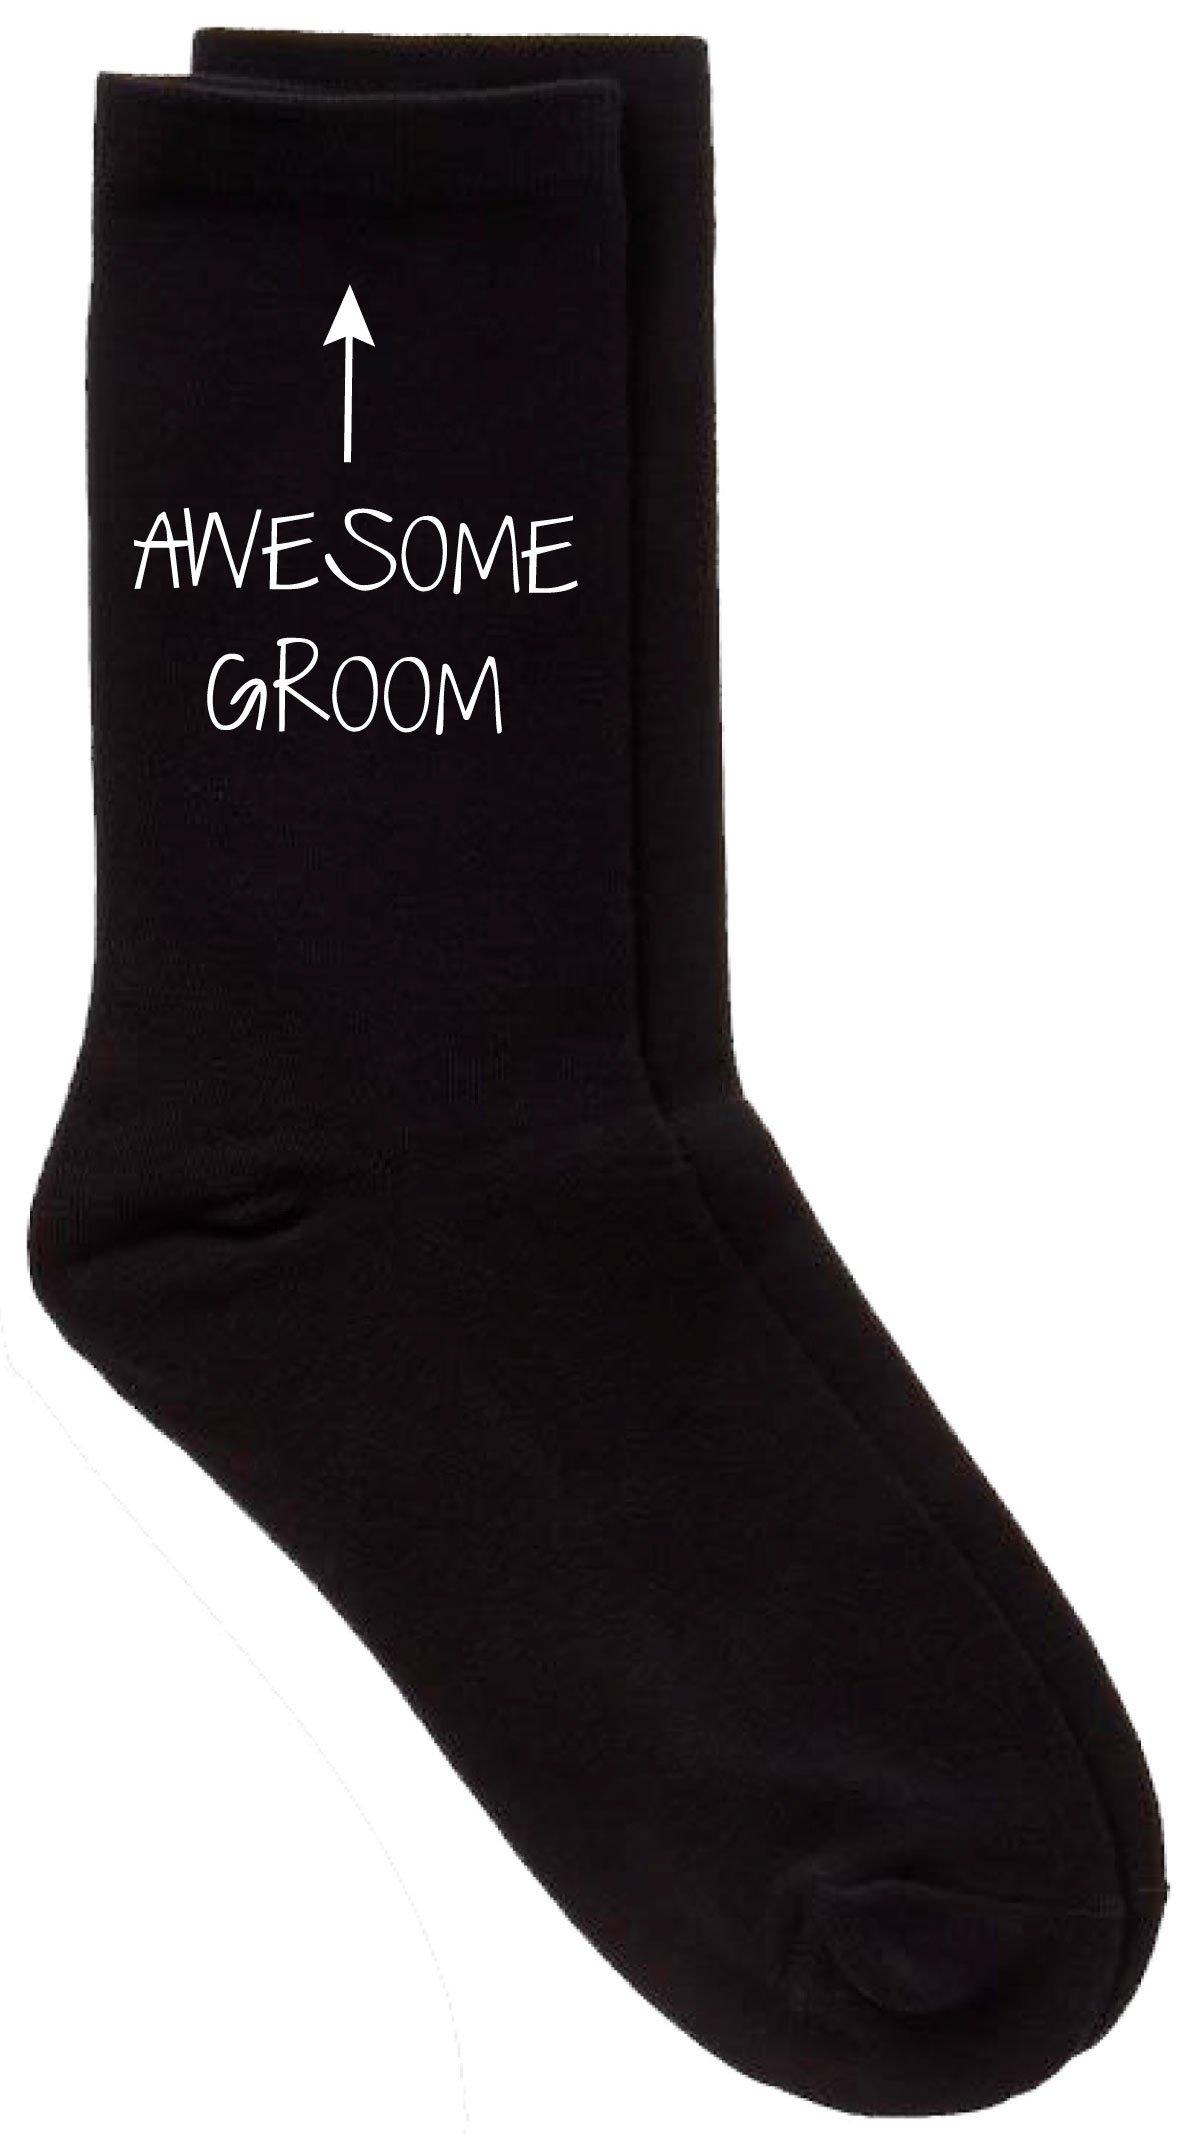 Awesome Groom Black Calf Socks